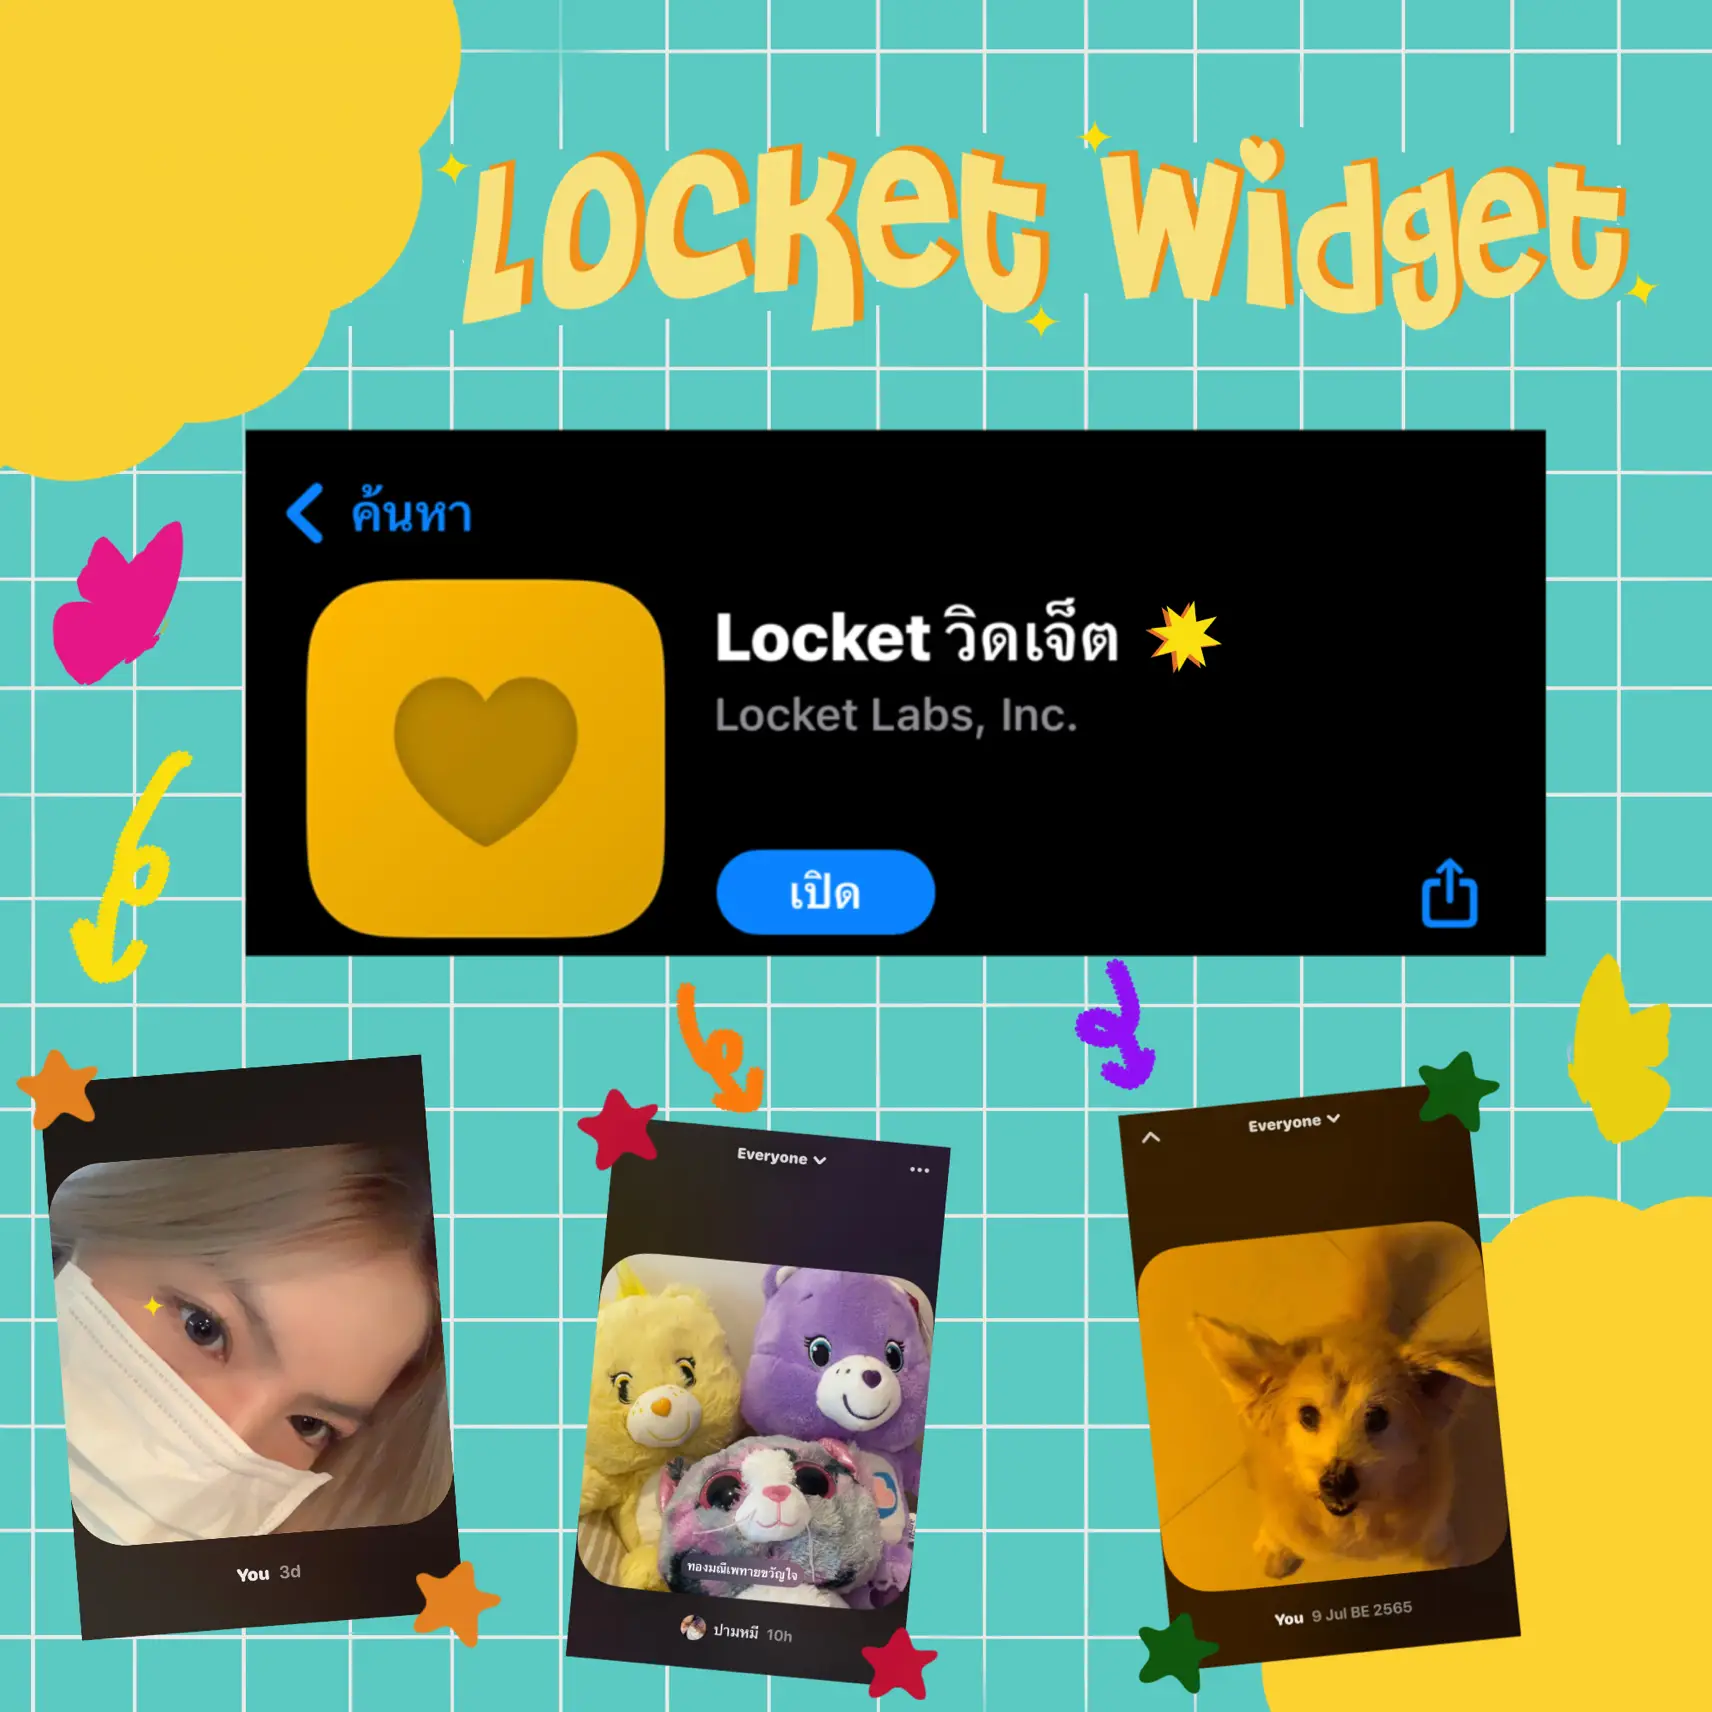 Is Locket Widget Free?